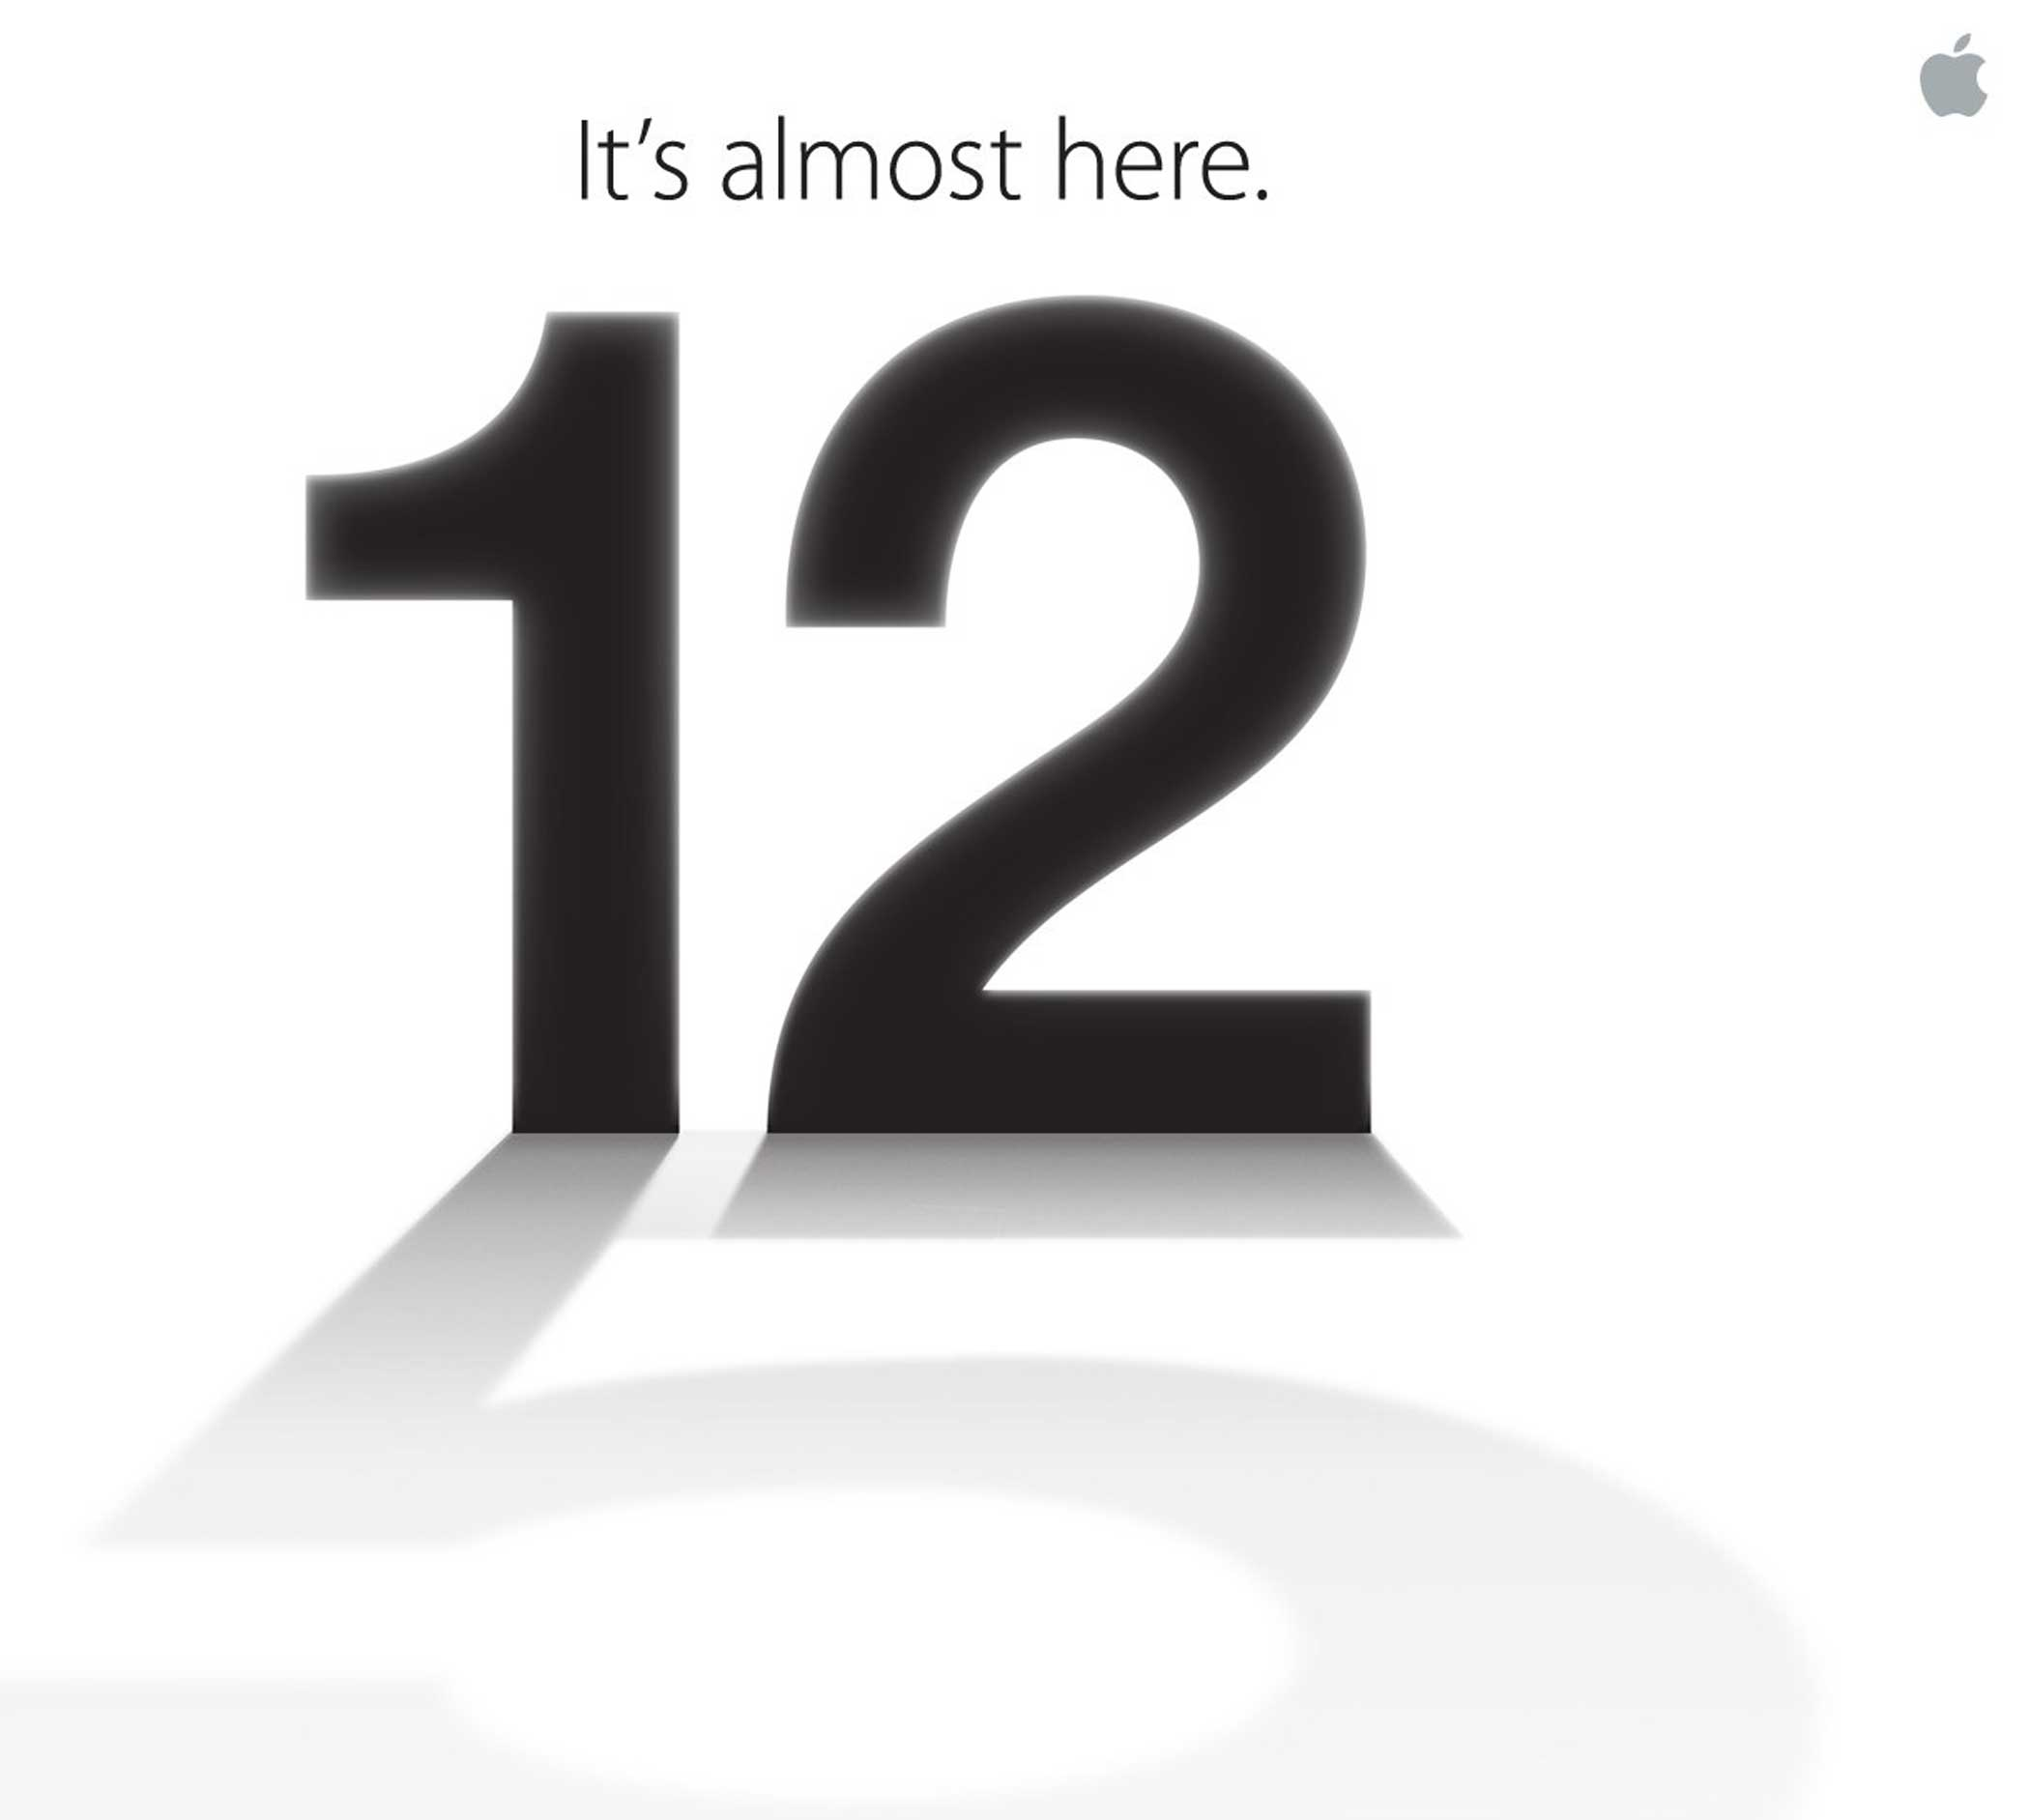 iPhone 5, 2012, Cupertino